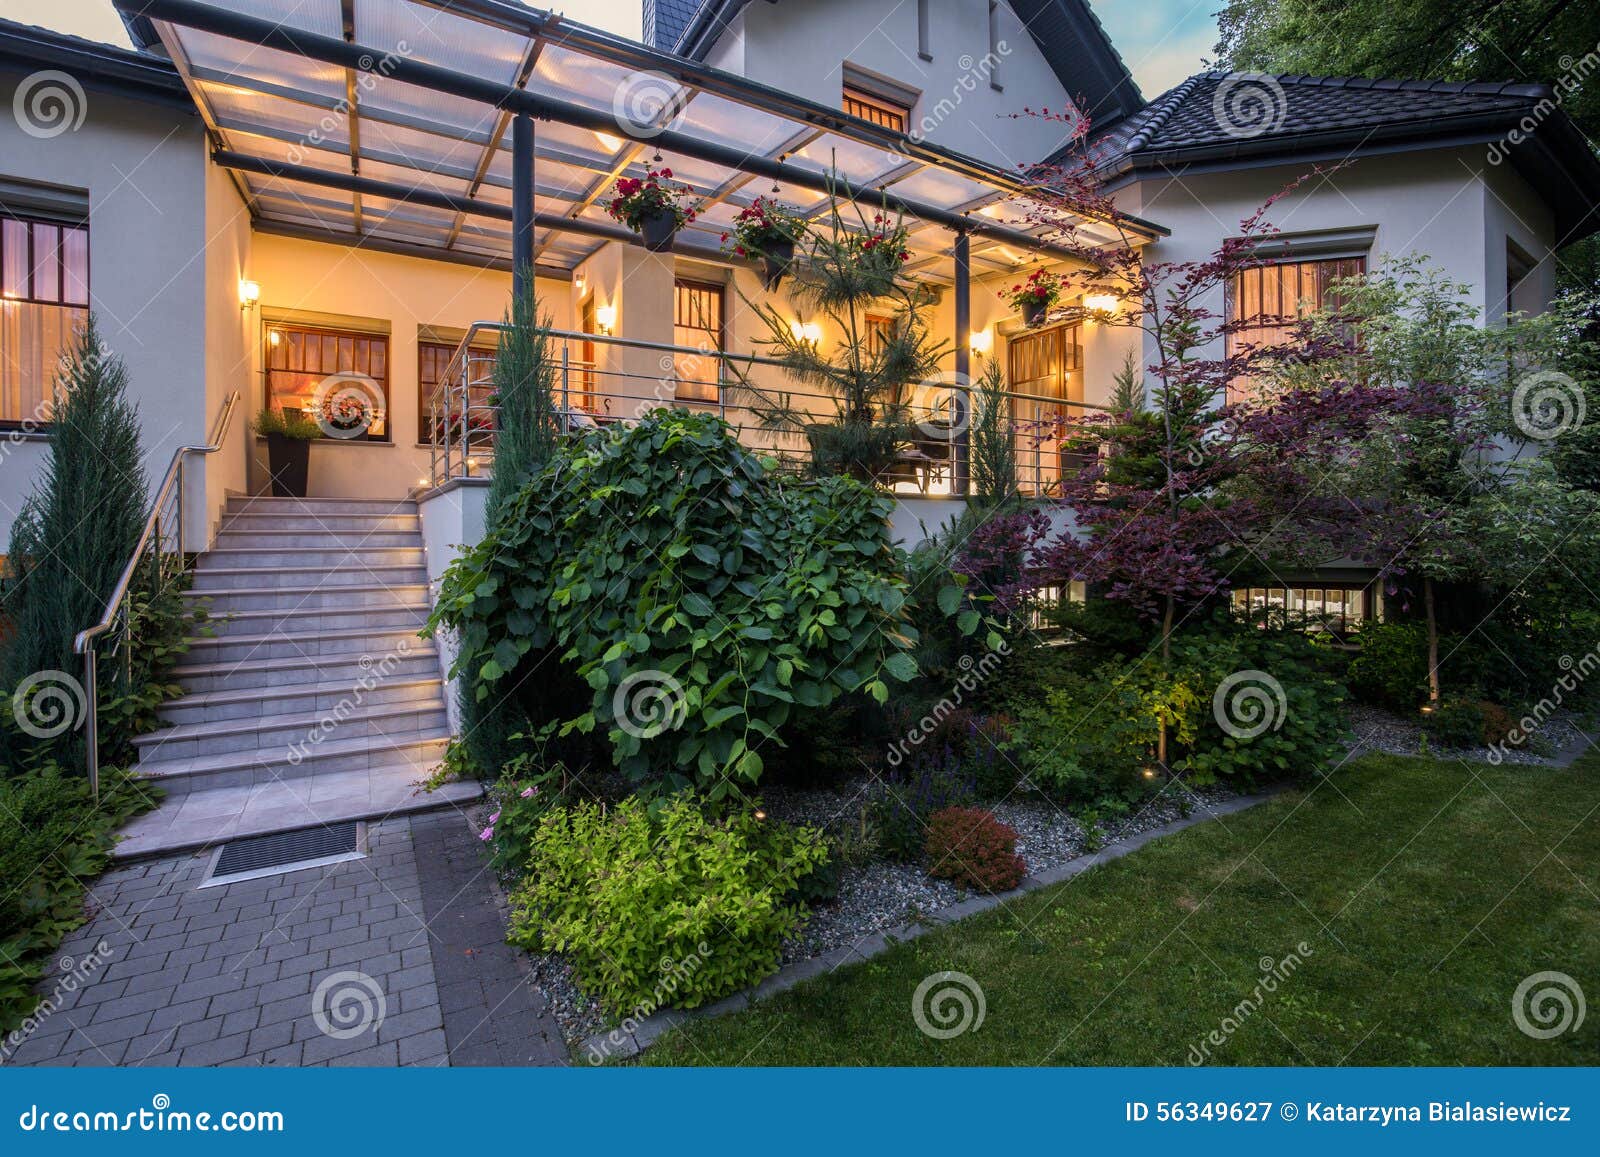 luxury house with verandah